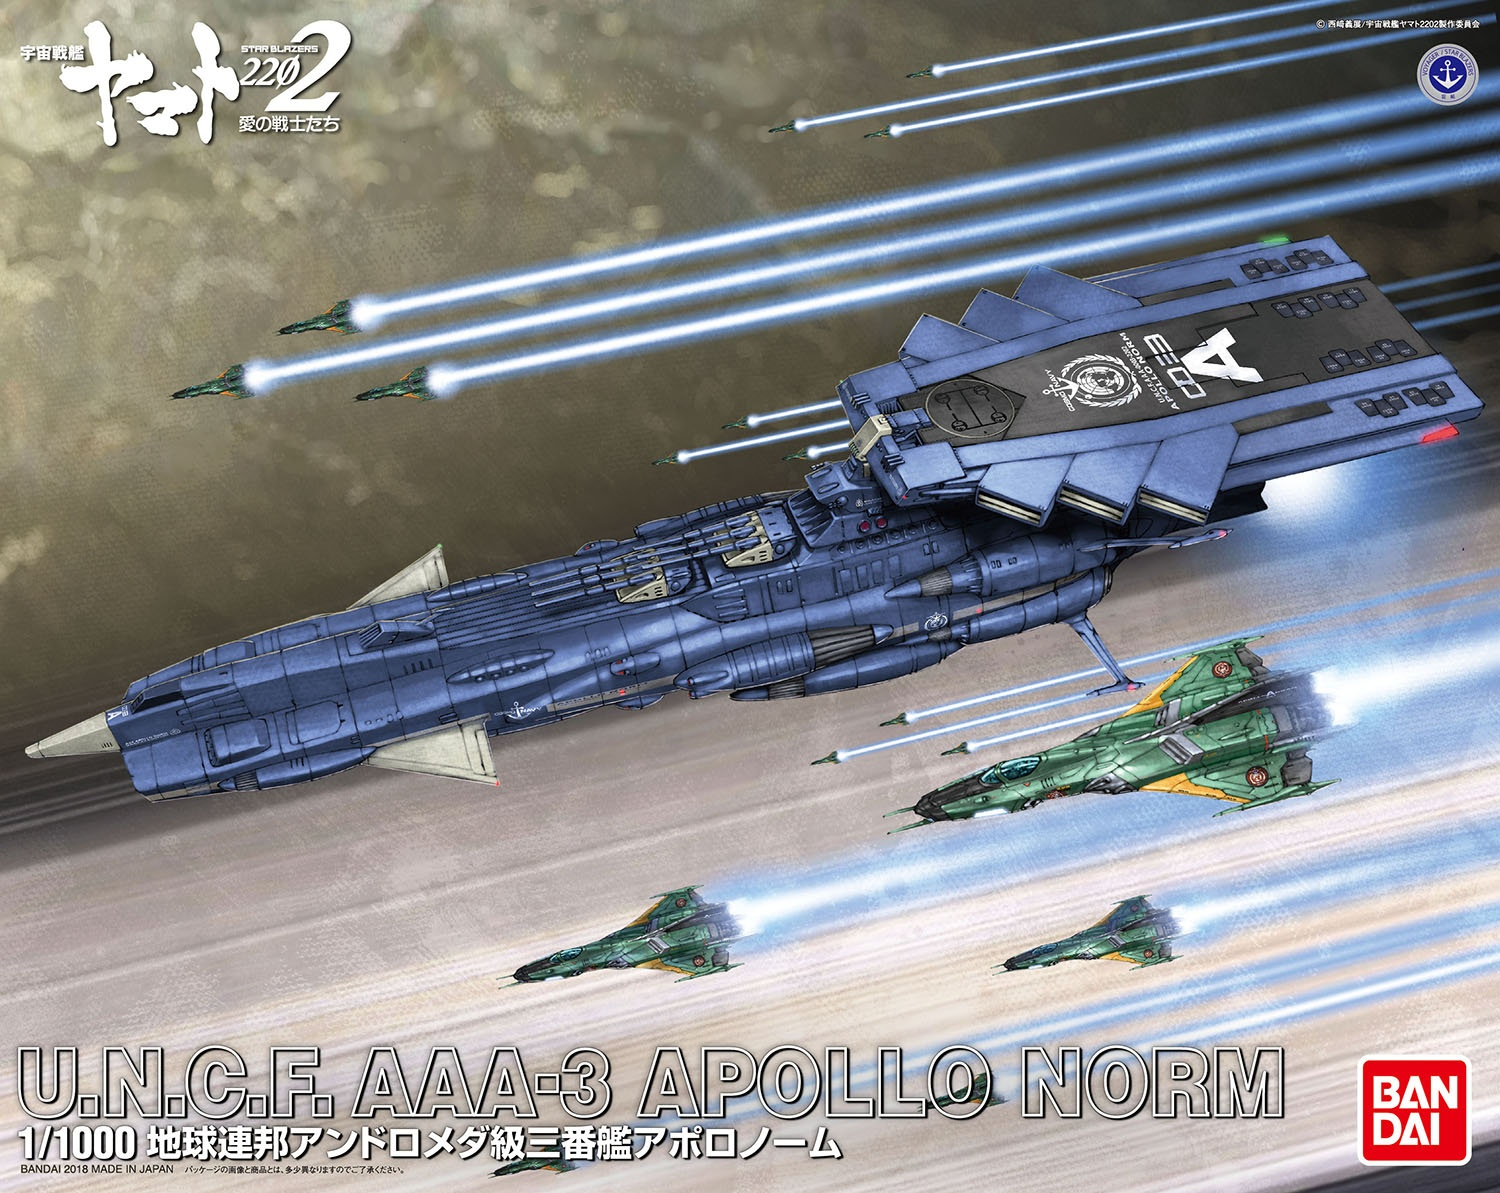 Star Blazers: Space Battleship Yamato 2199 1/1000 EARTH FEDERATION ANDROMEDA-CLASS 3RD SHIP APOLLO NORM